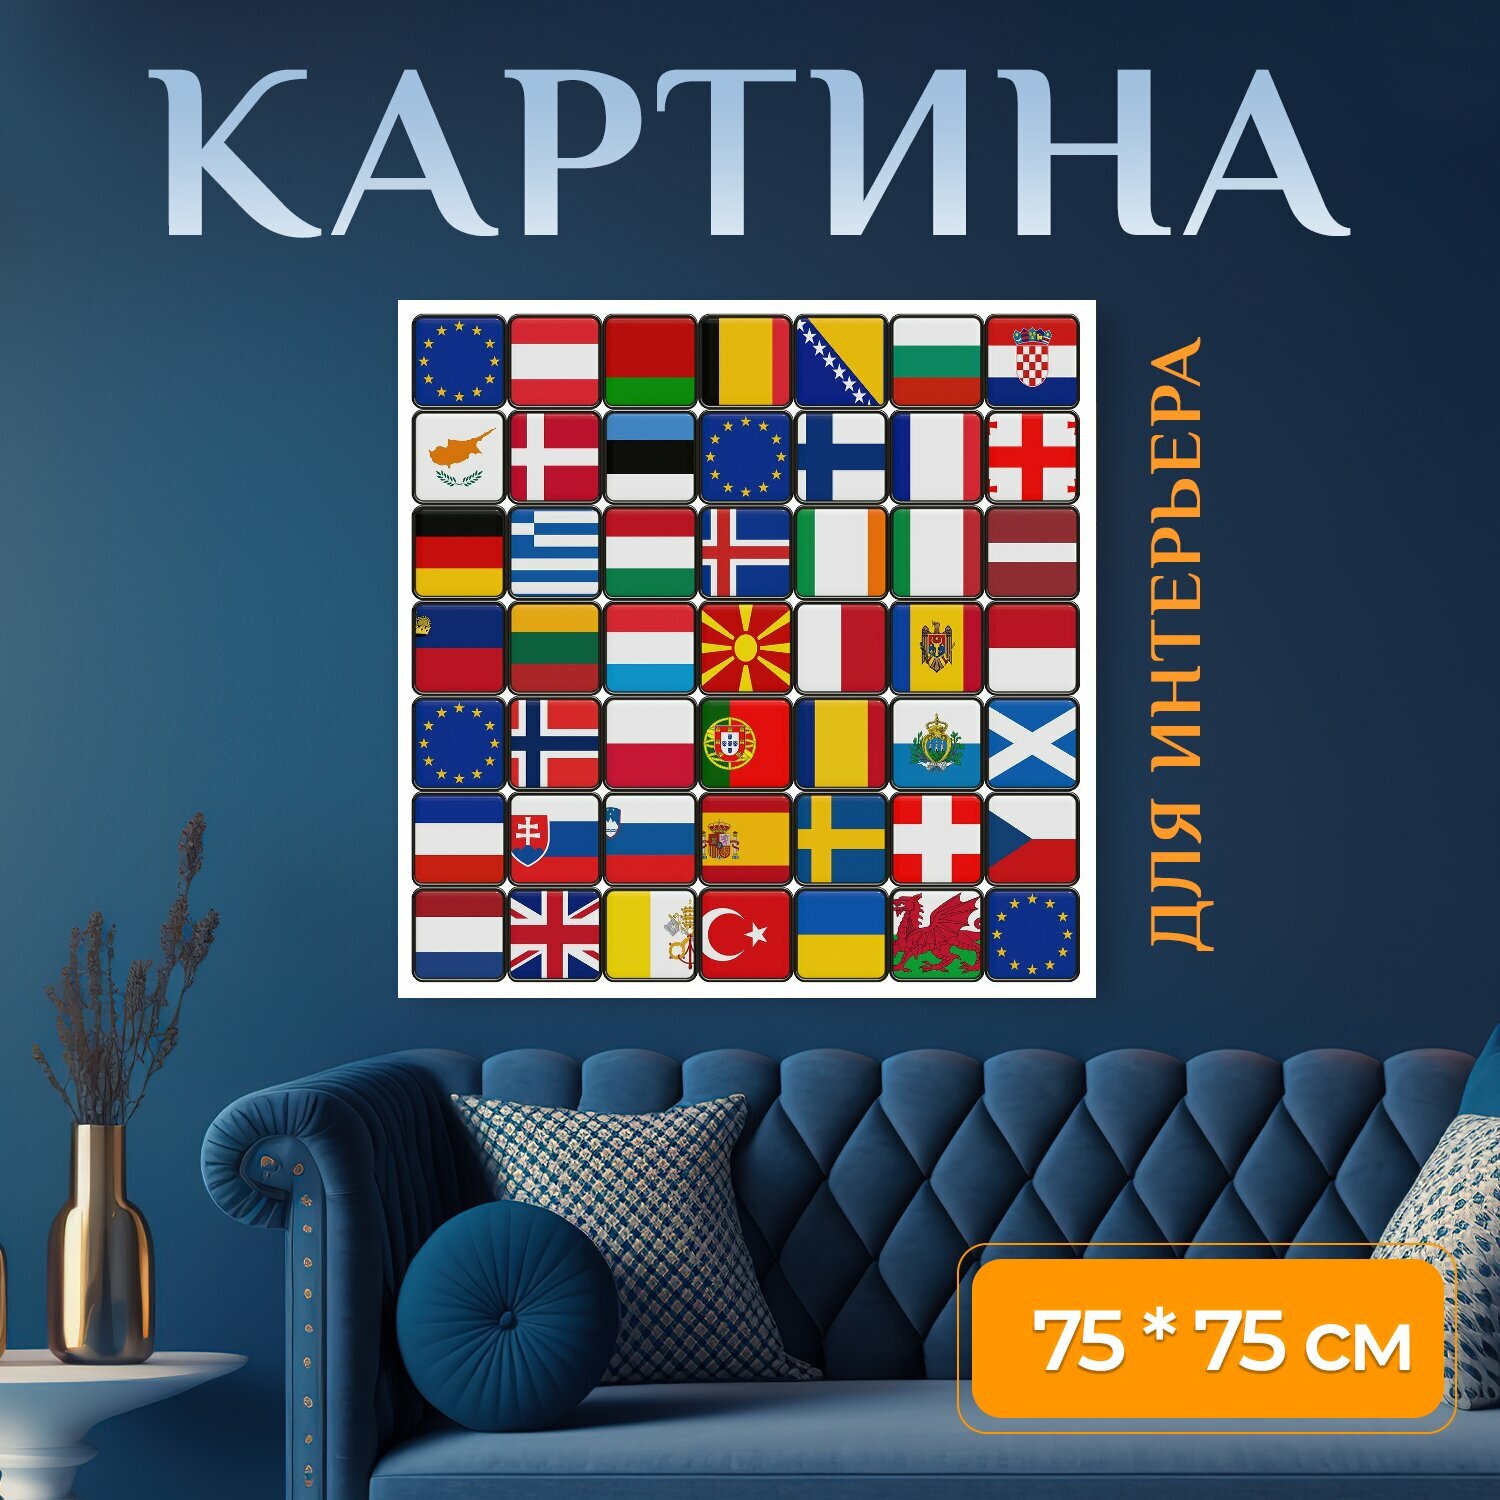 Картина на холсте "Европа, знамя, флаг" на подрамнике 75х75 см. для интерьера